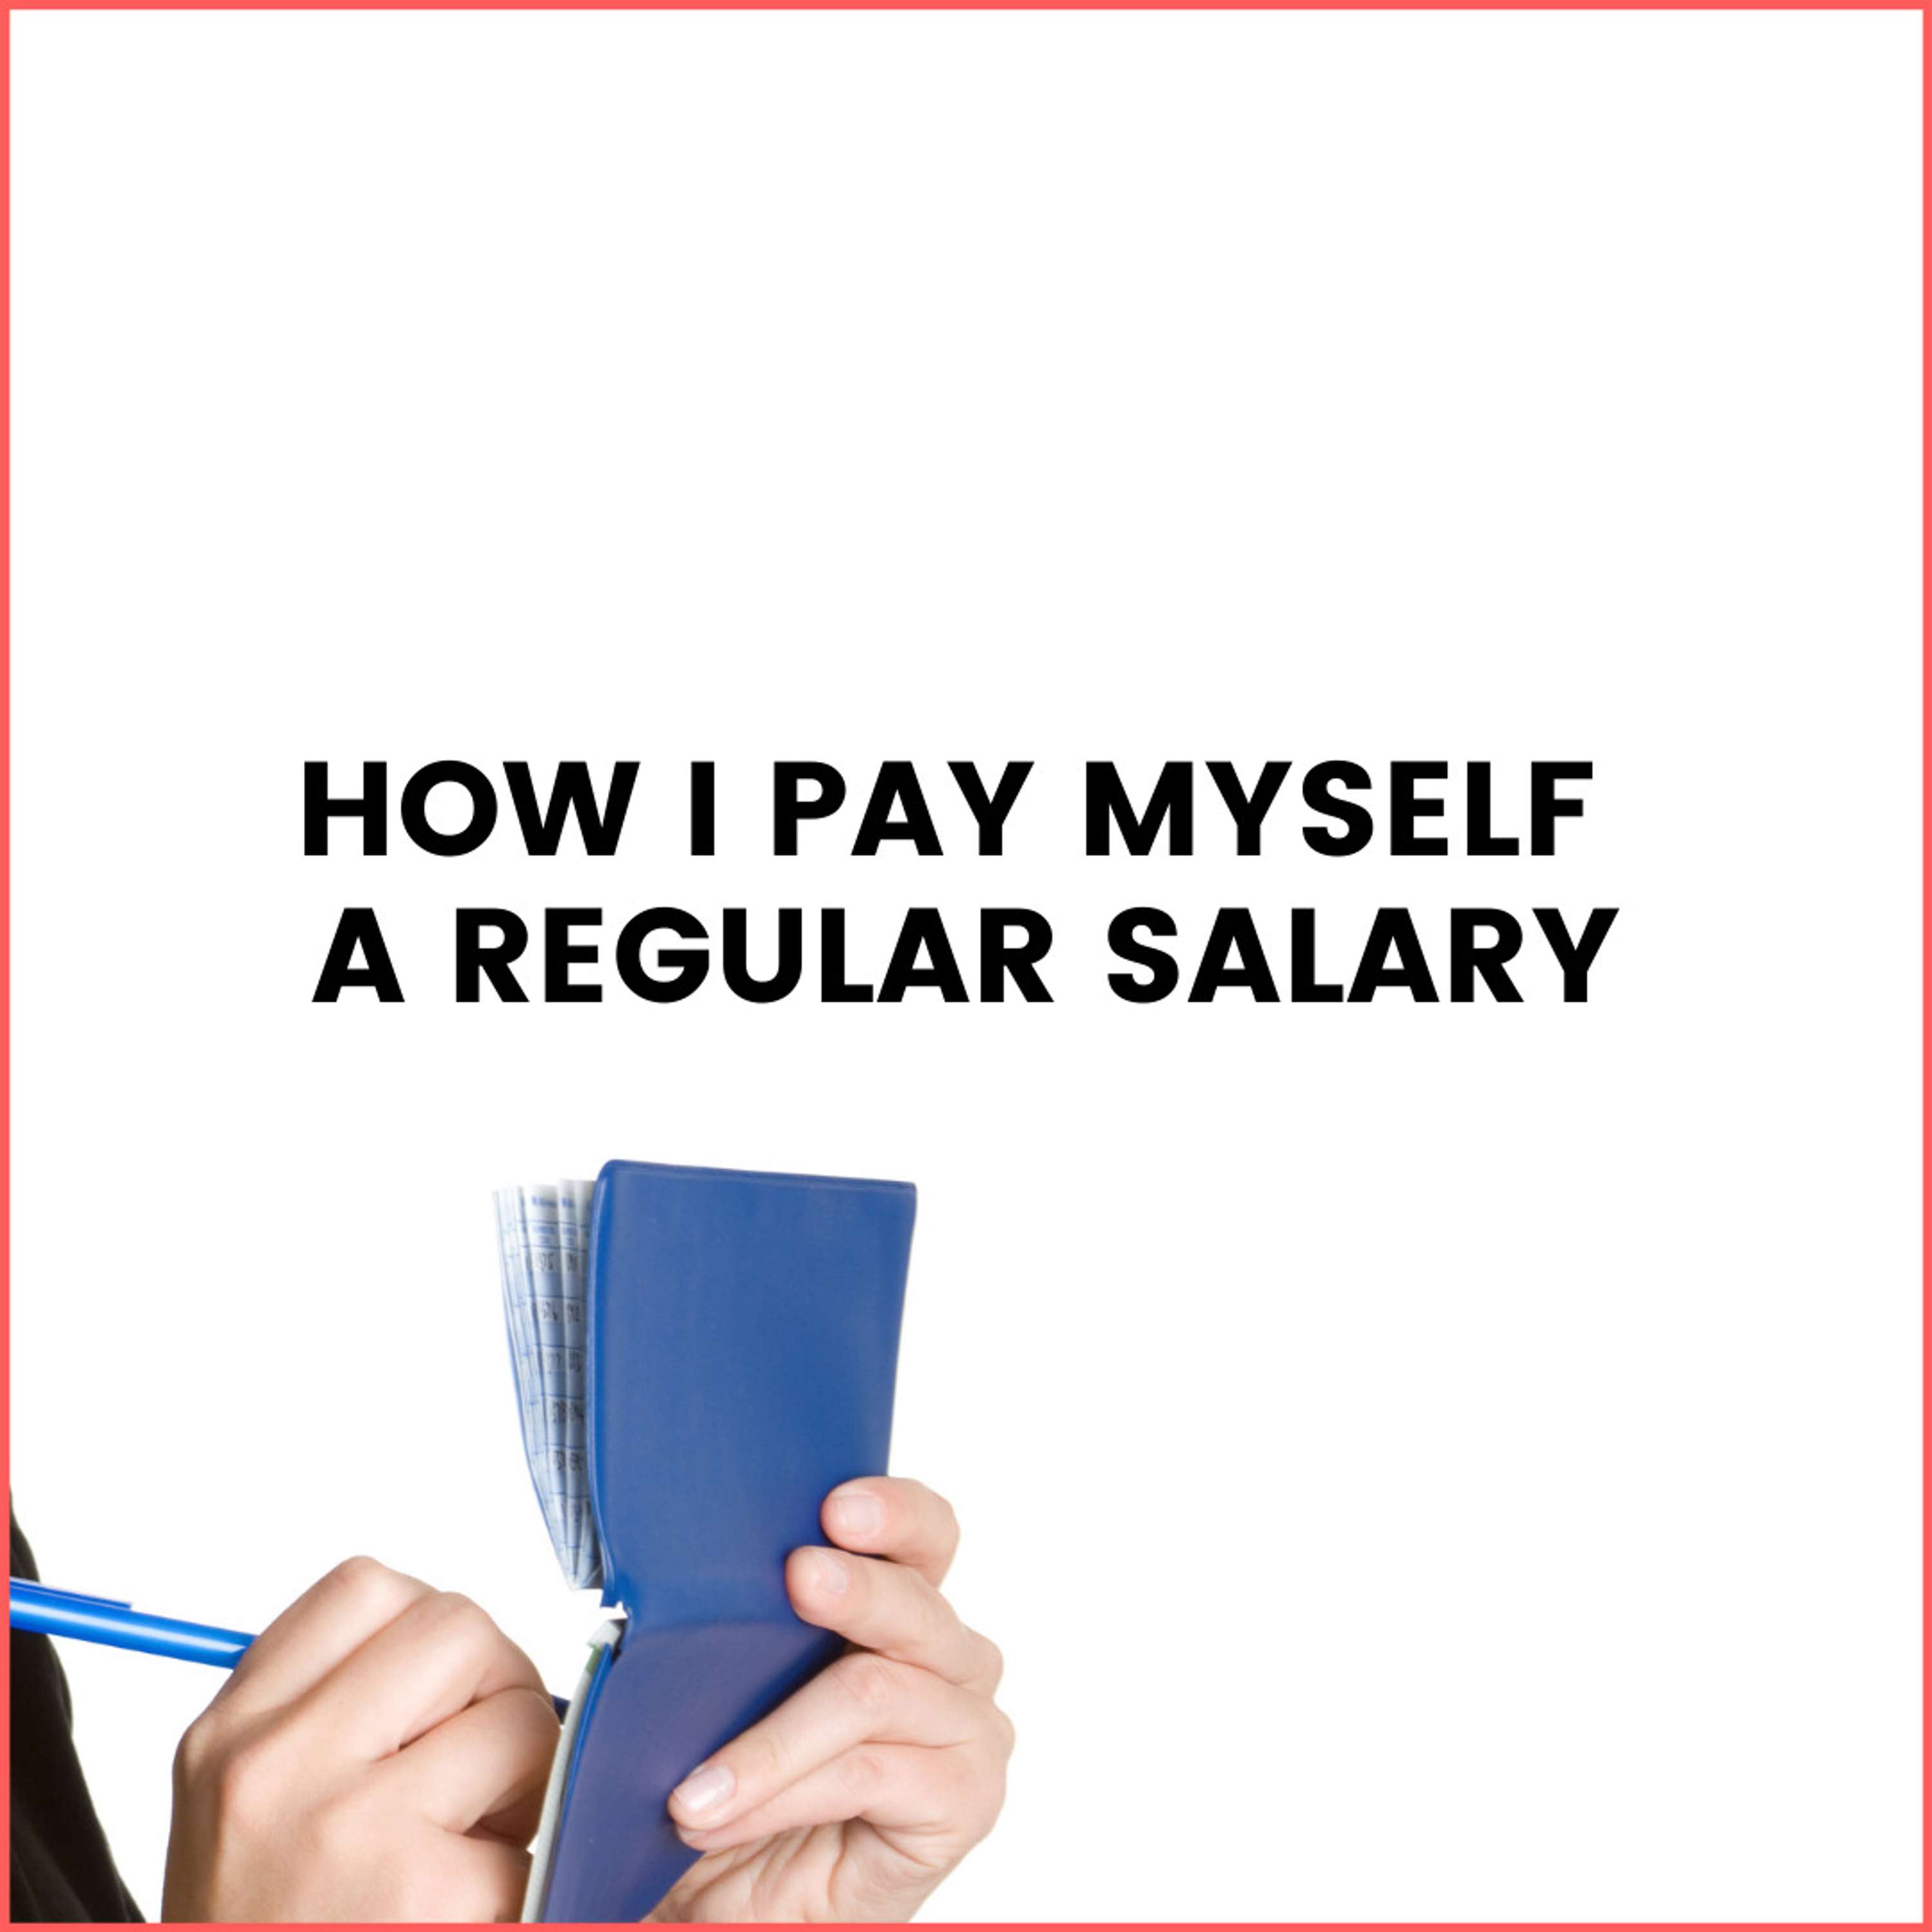 38. How I Pay Myself a Regular Salary